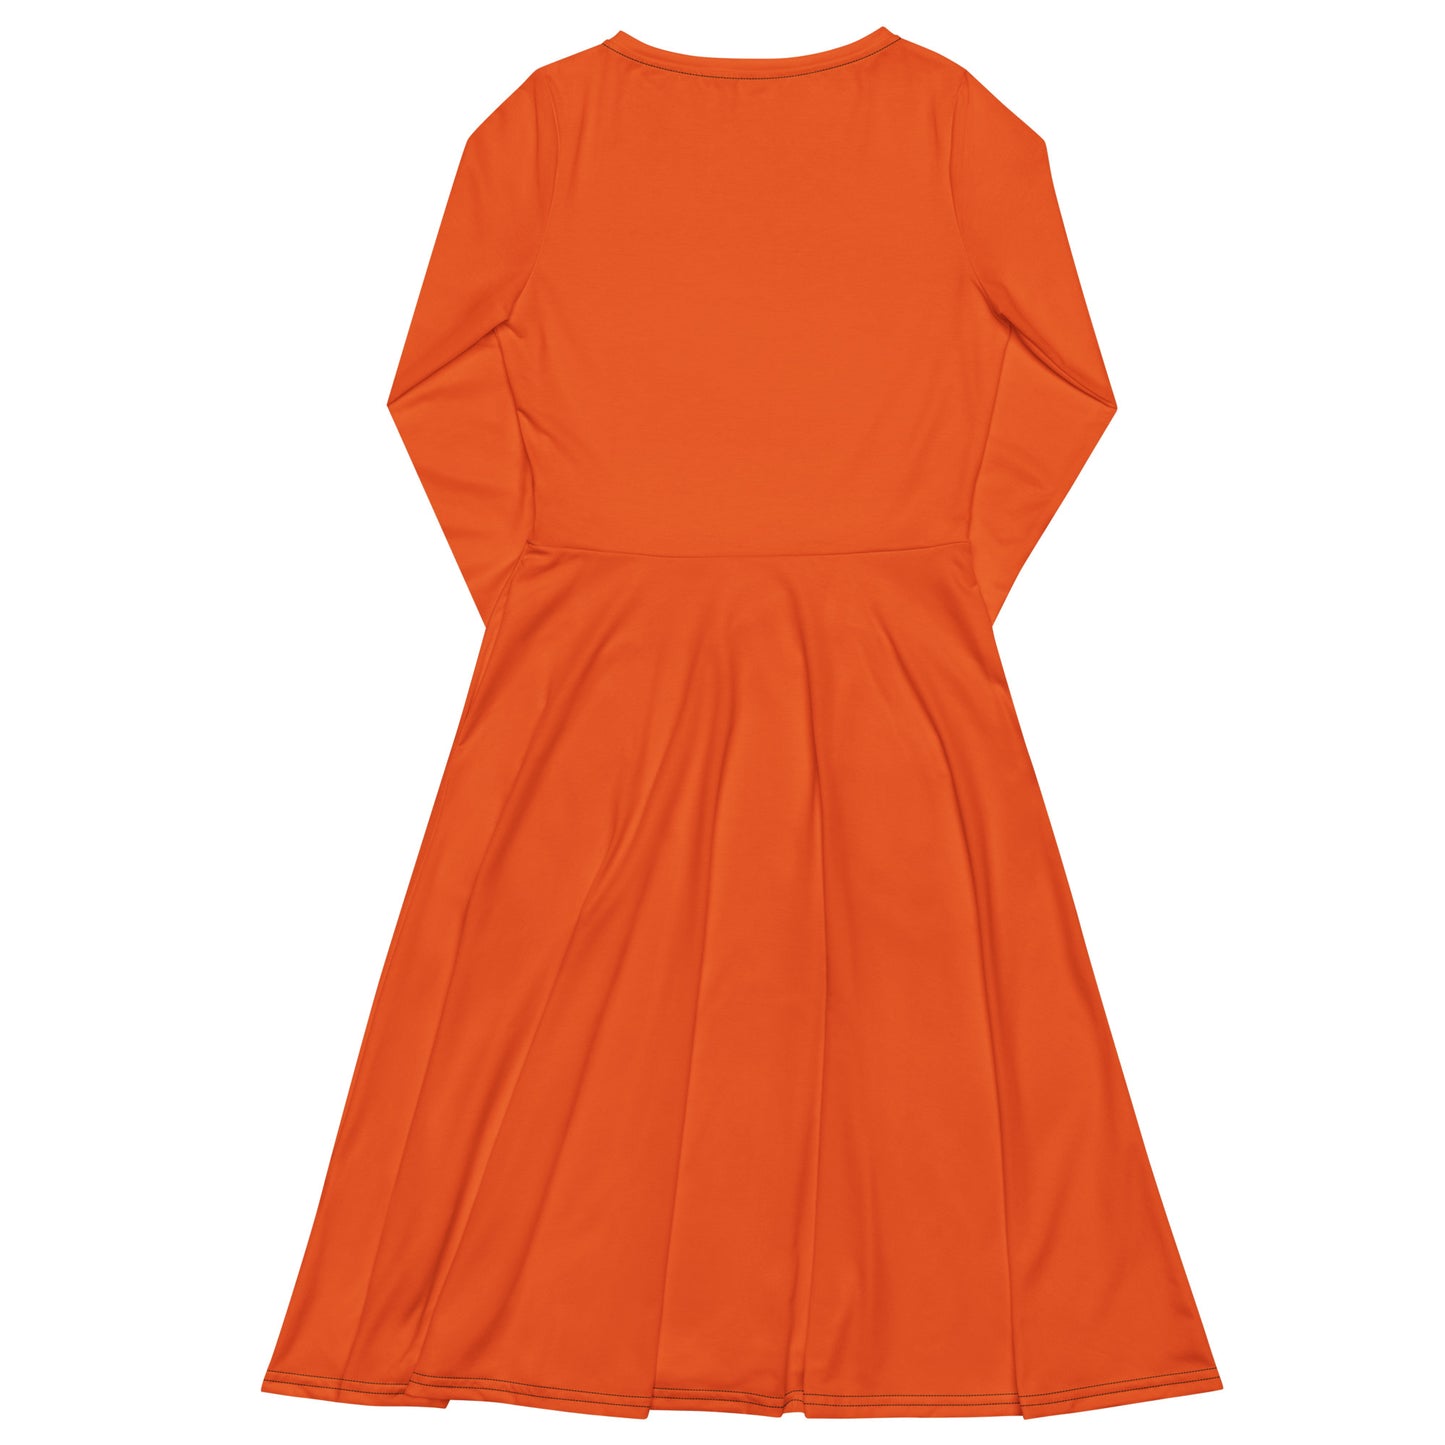 Long-Sleeve Midi Dress: Eat Drink and Be Scary (orange)